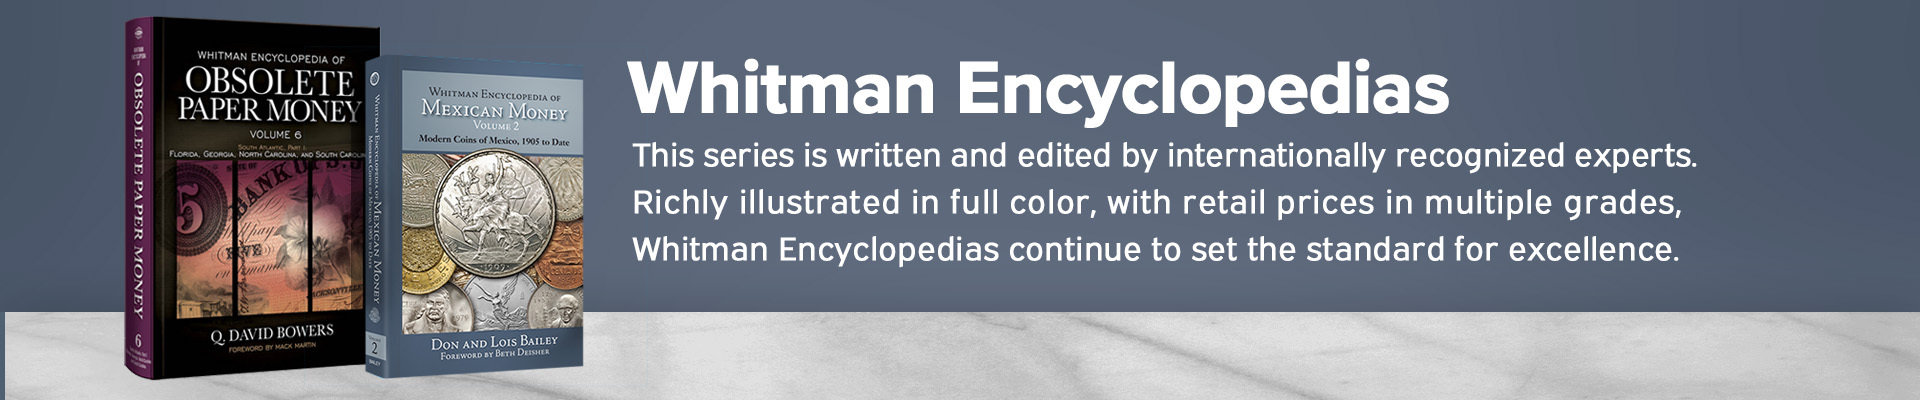 Whitman Encyclopedias